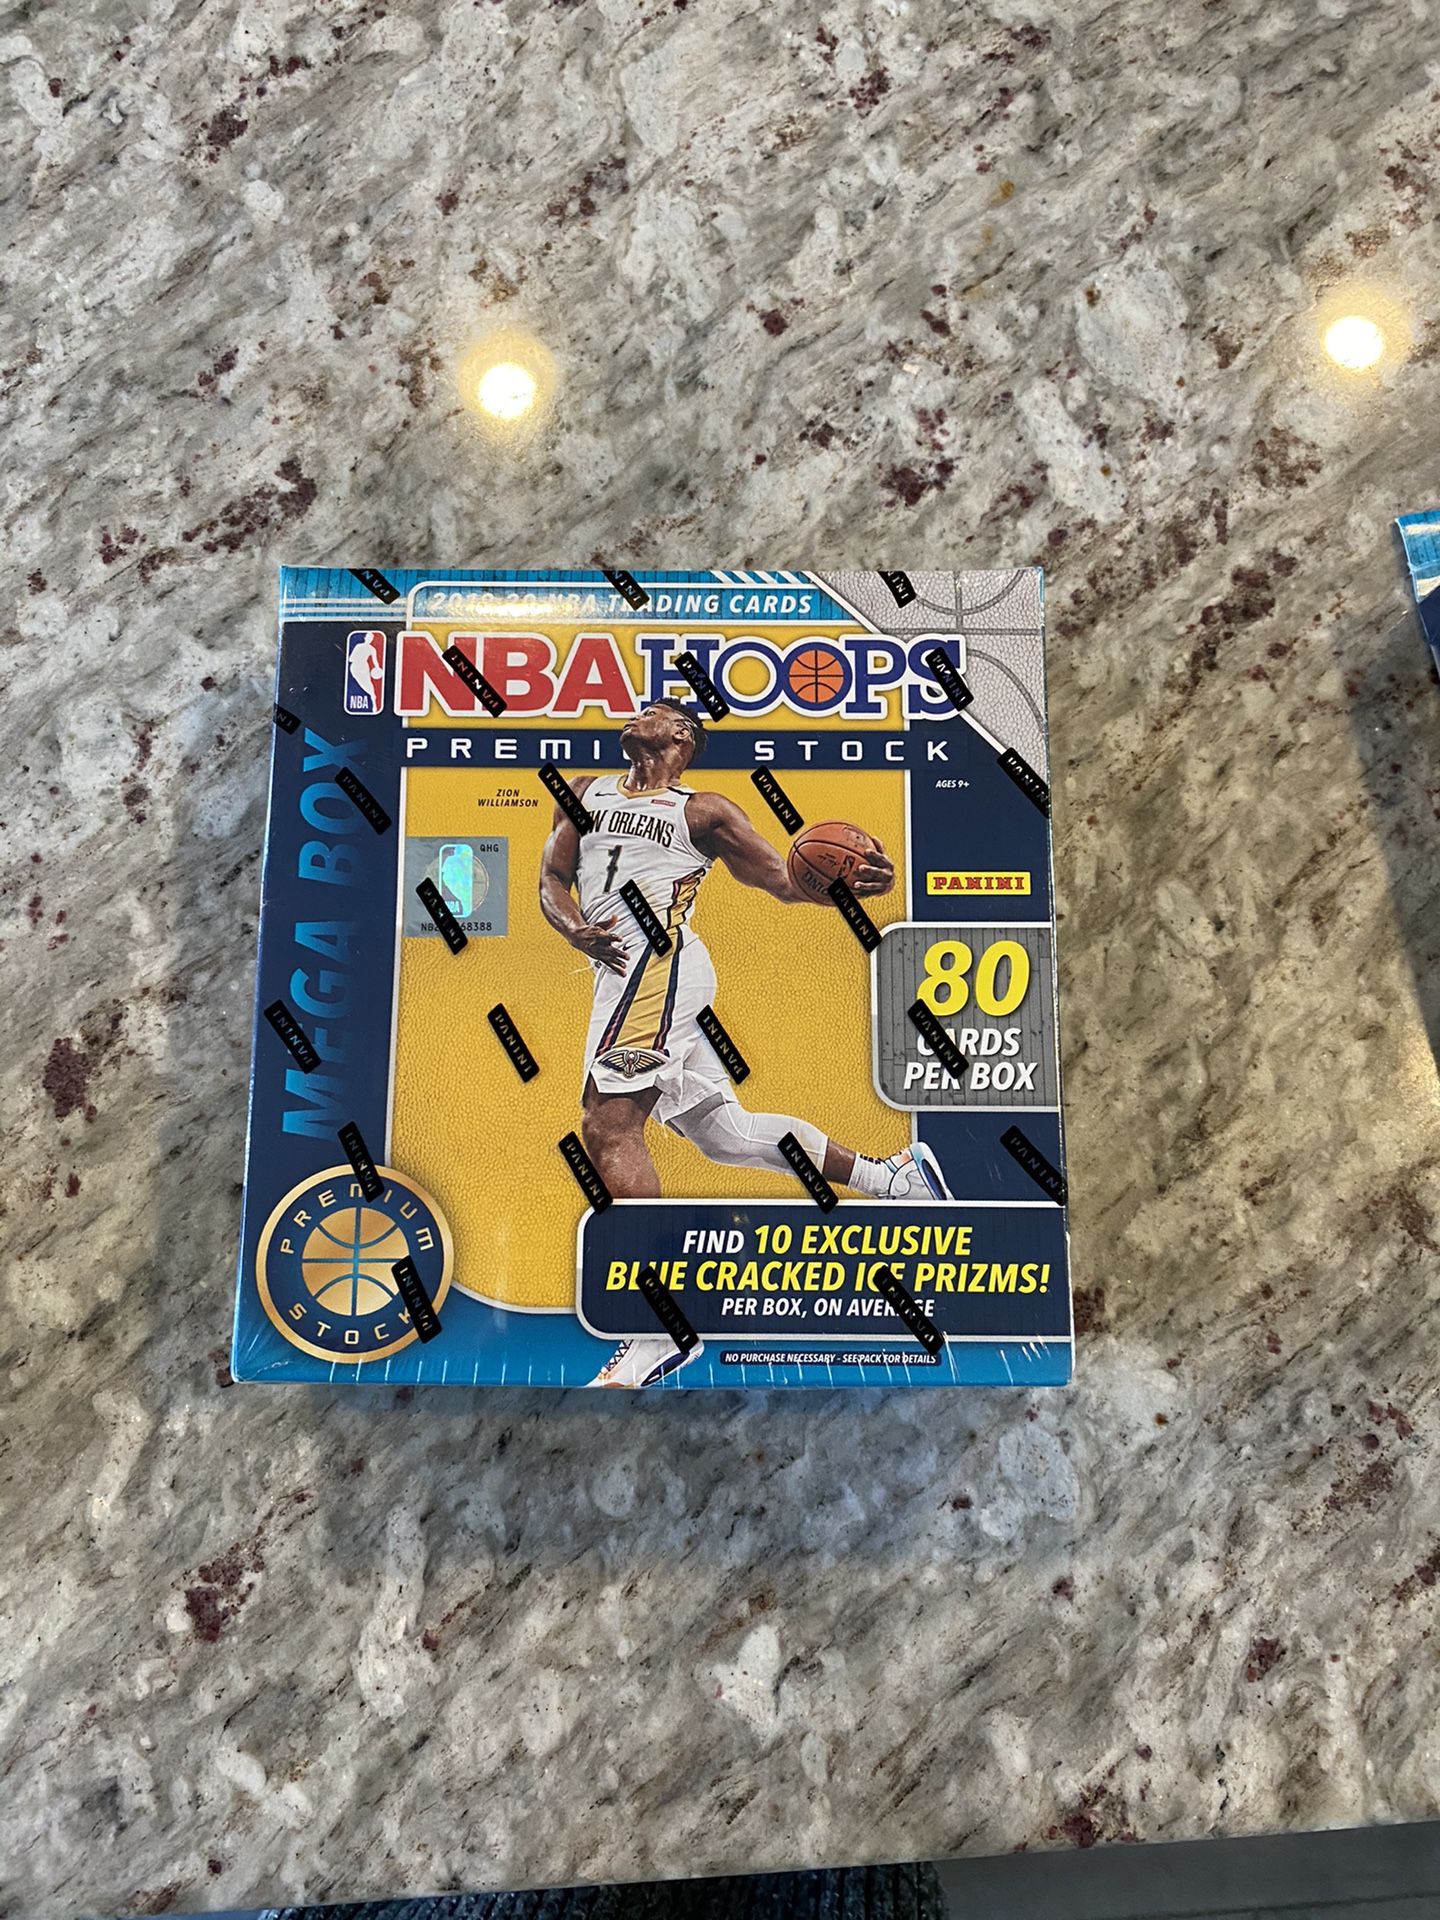 2019-2020 NBA Hoops Premium Stock Bundle: Mega/Blaster/Hanger